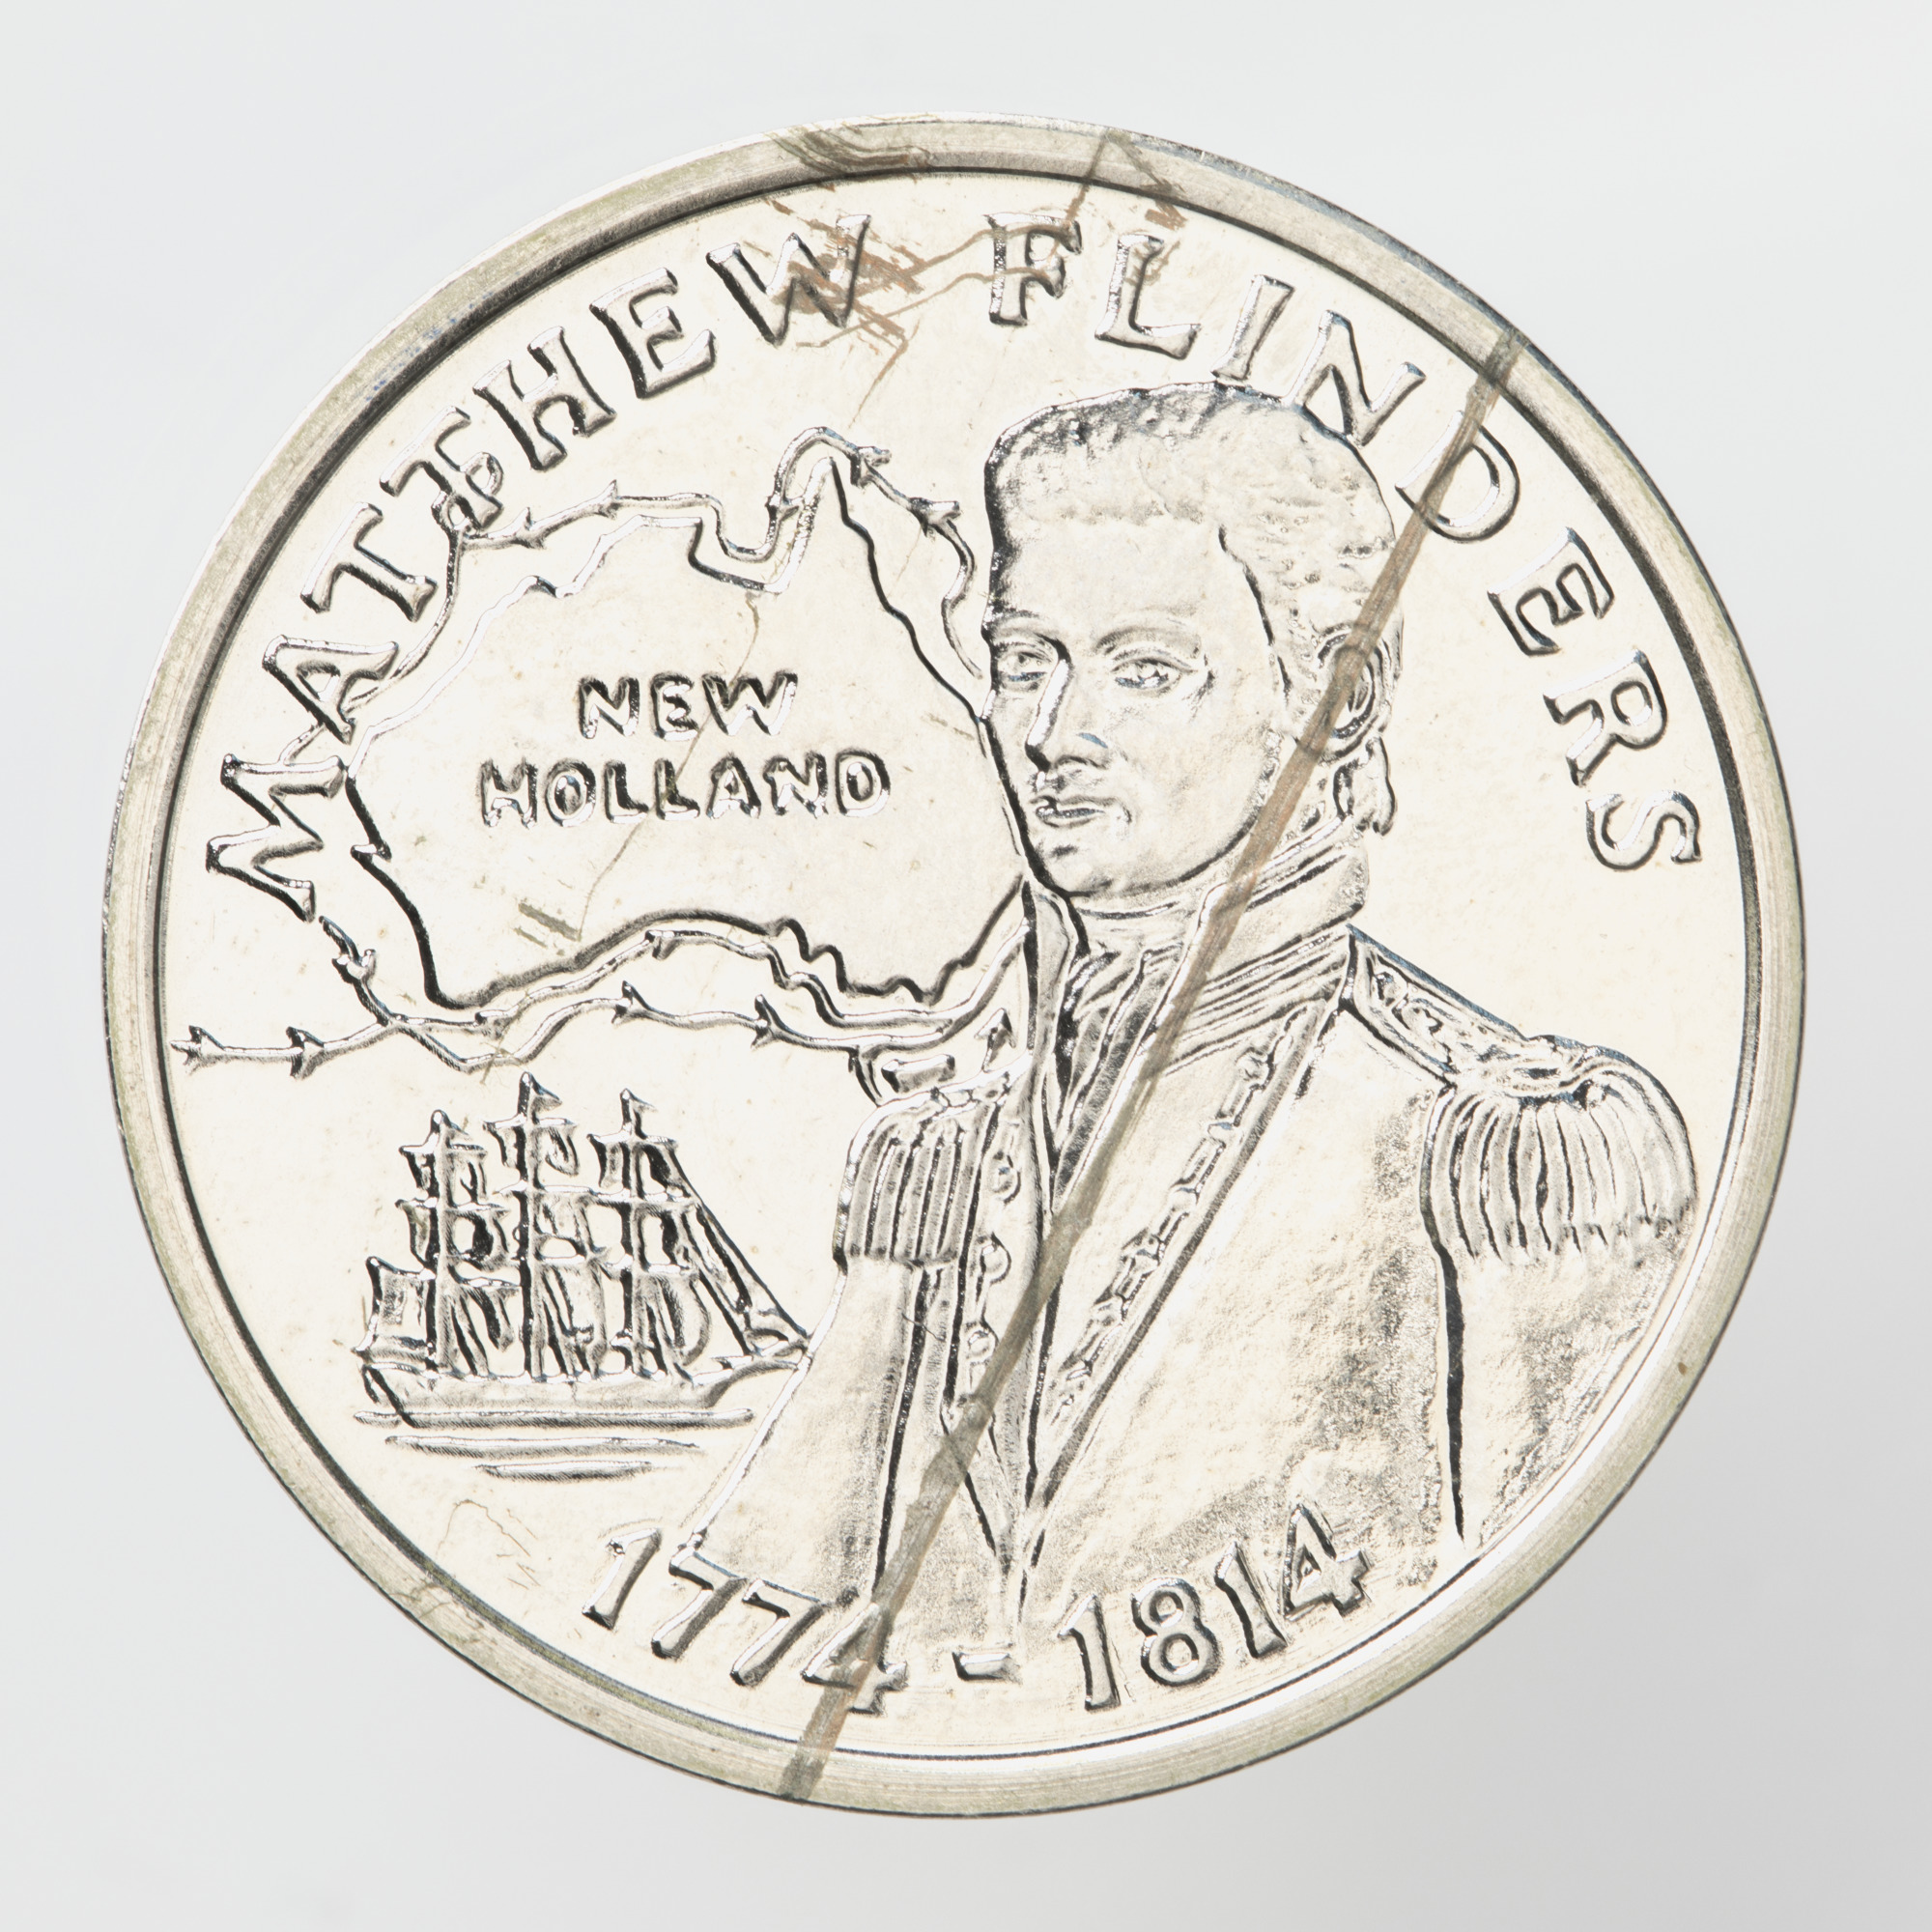 Australian bicentennial commemorative medal depicting Matthew Flinders.